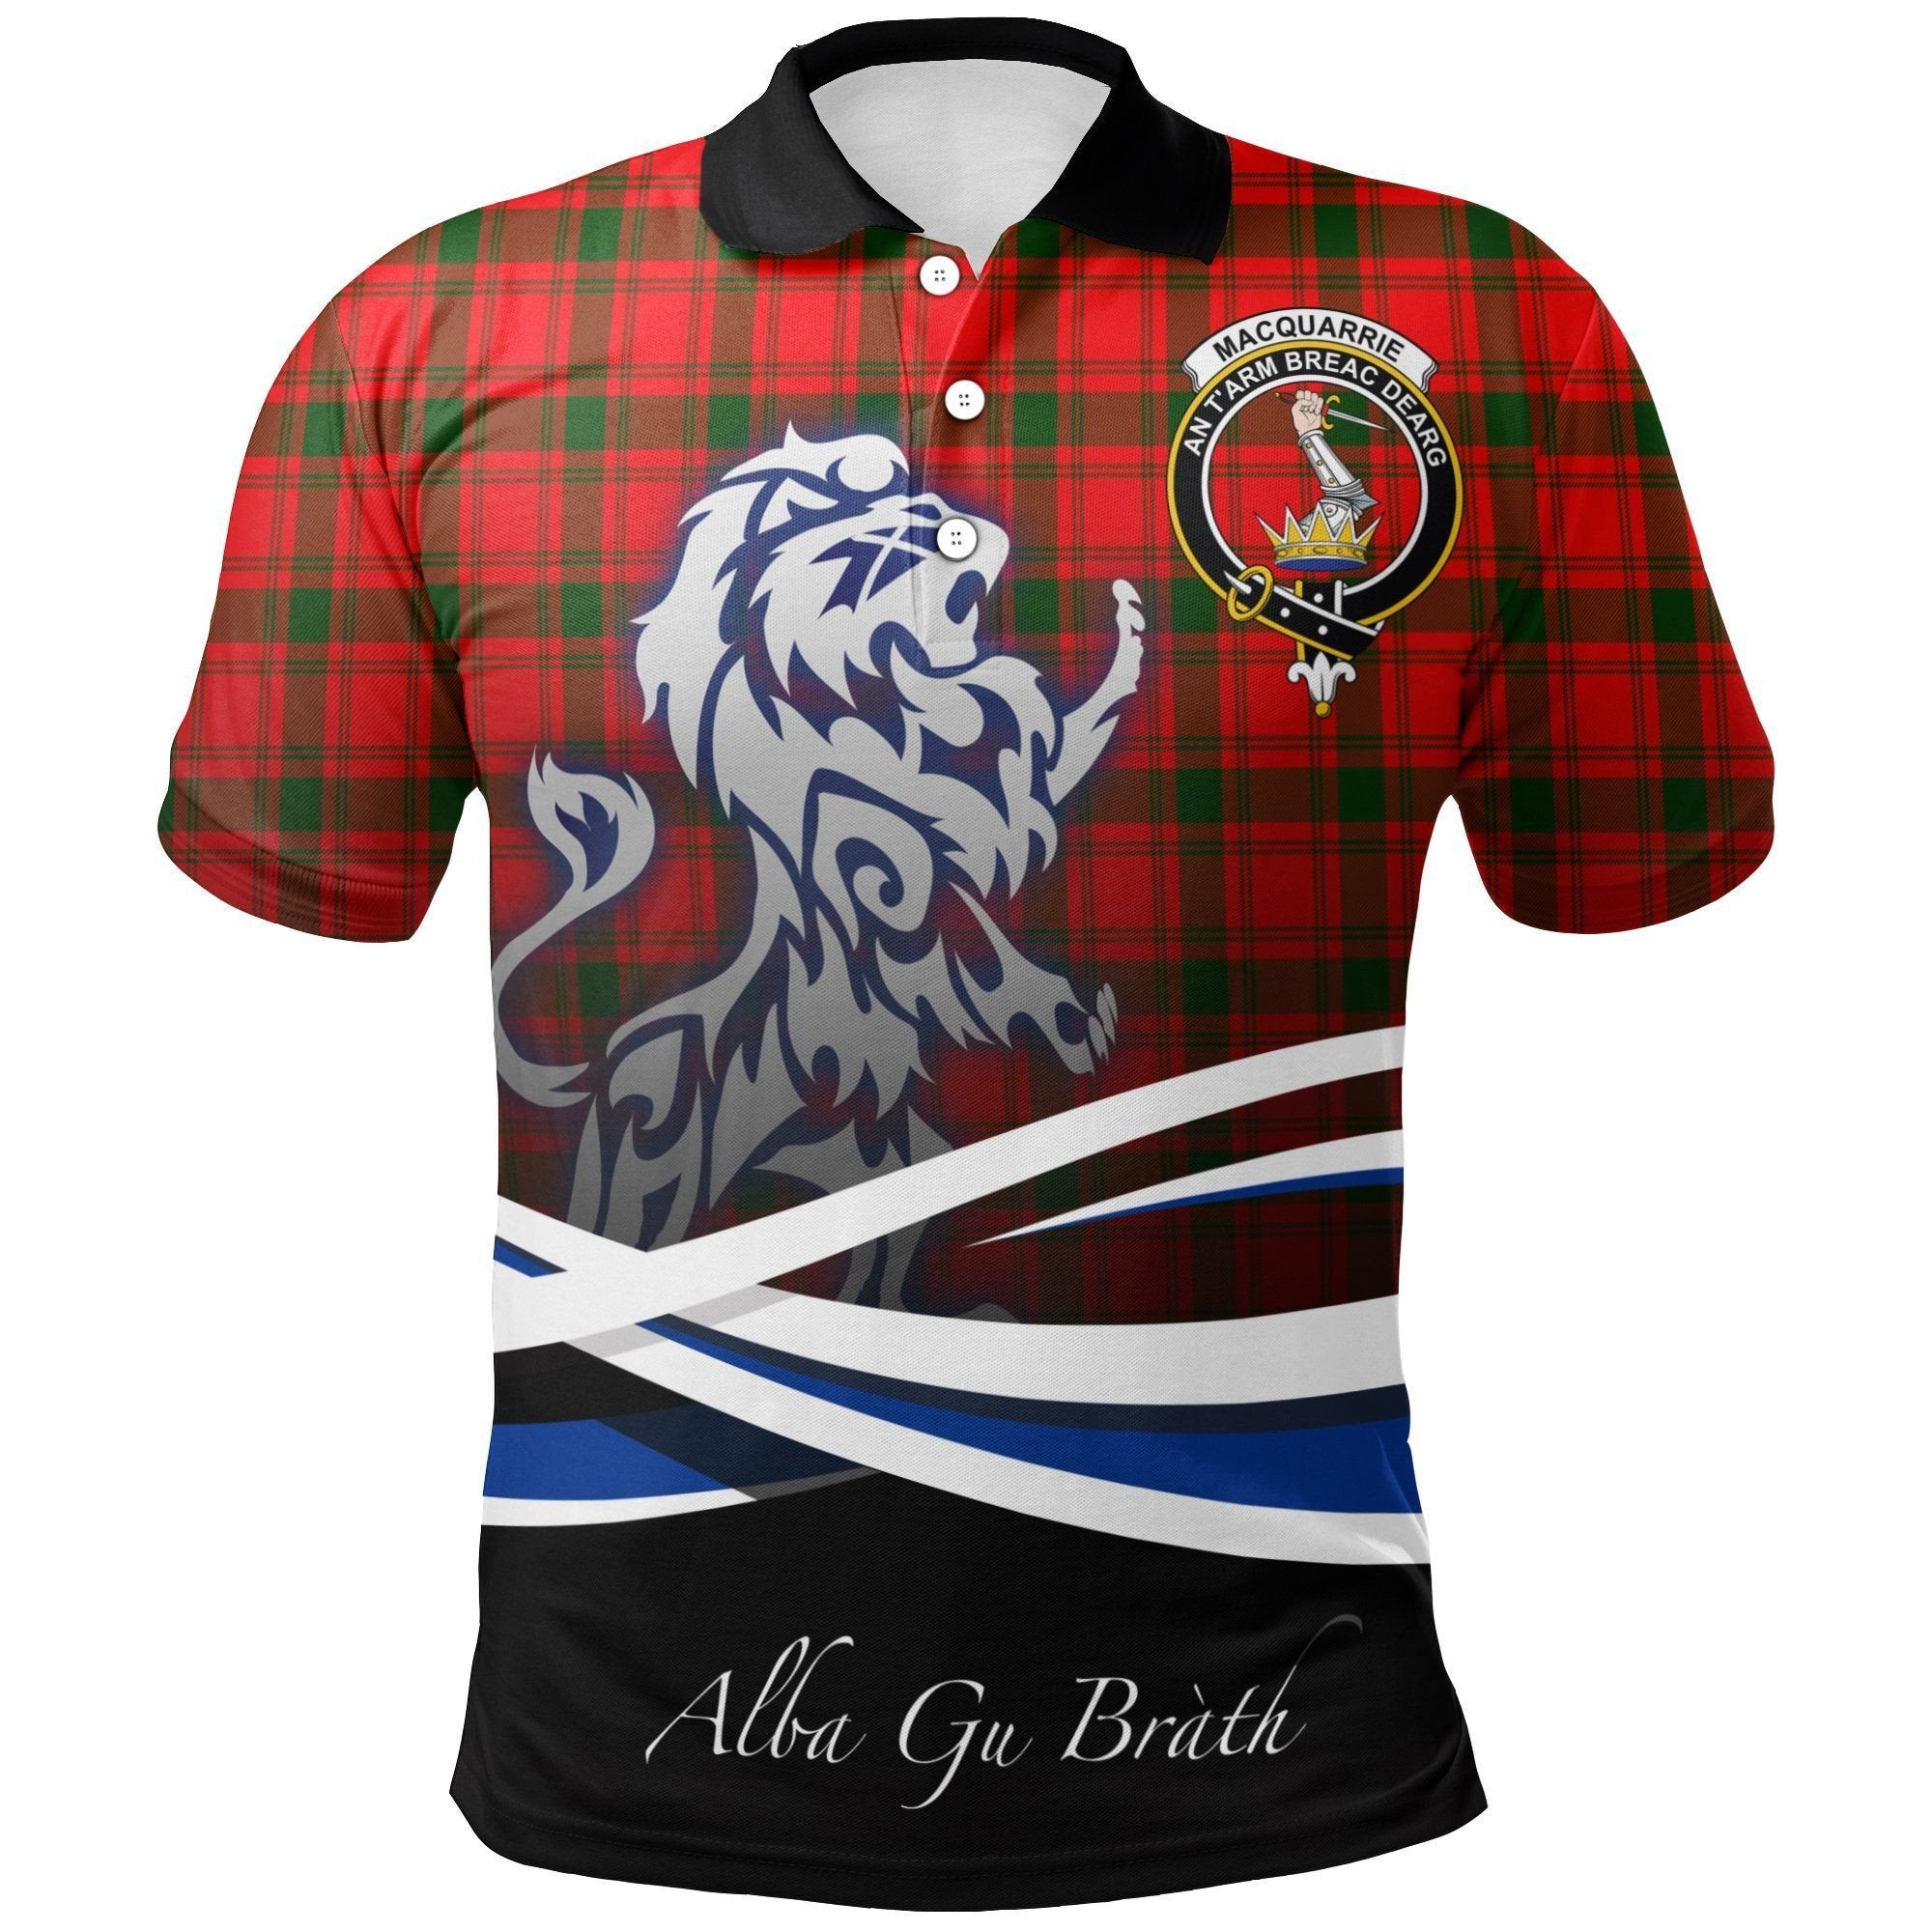 MacQuarrie Modern Clan Polo Shirt, Scottish Tartan MacQuarrie Modern Clans Polo Shirt Crest Lion Style